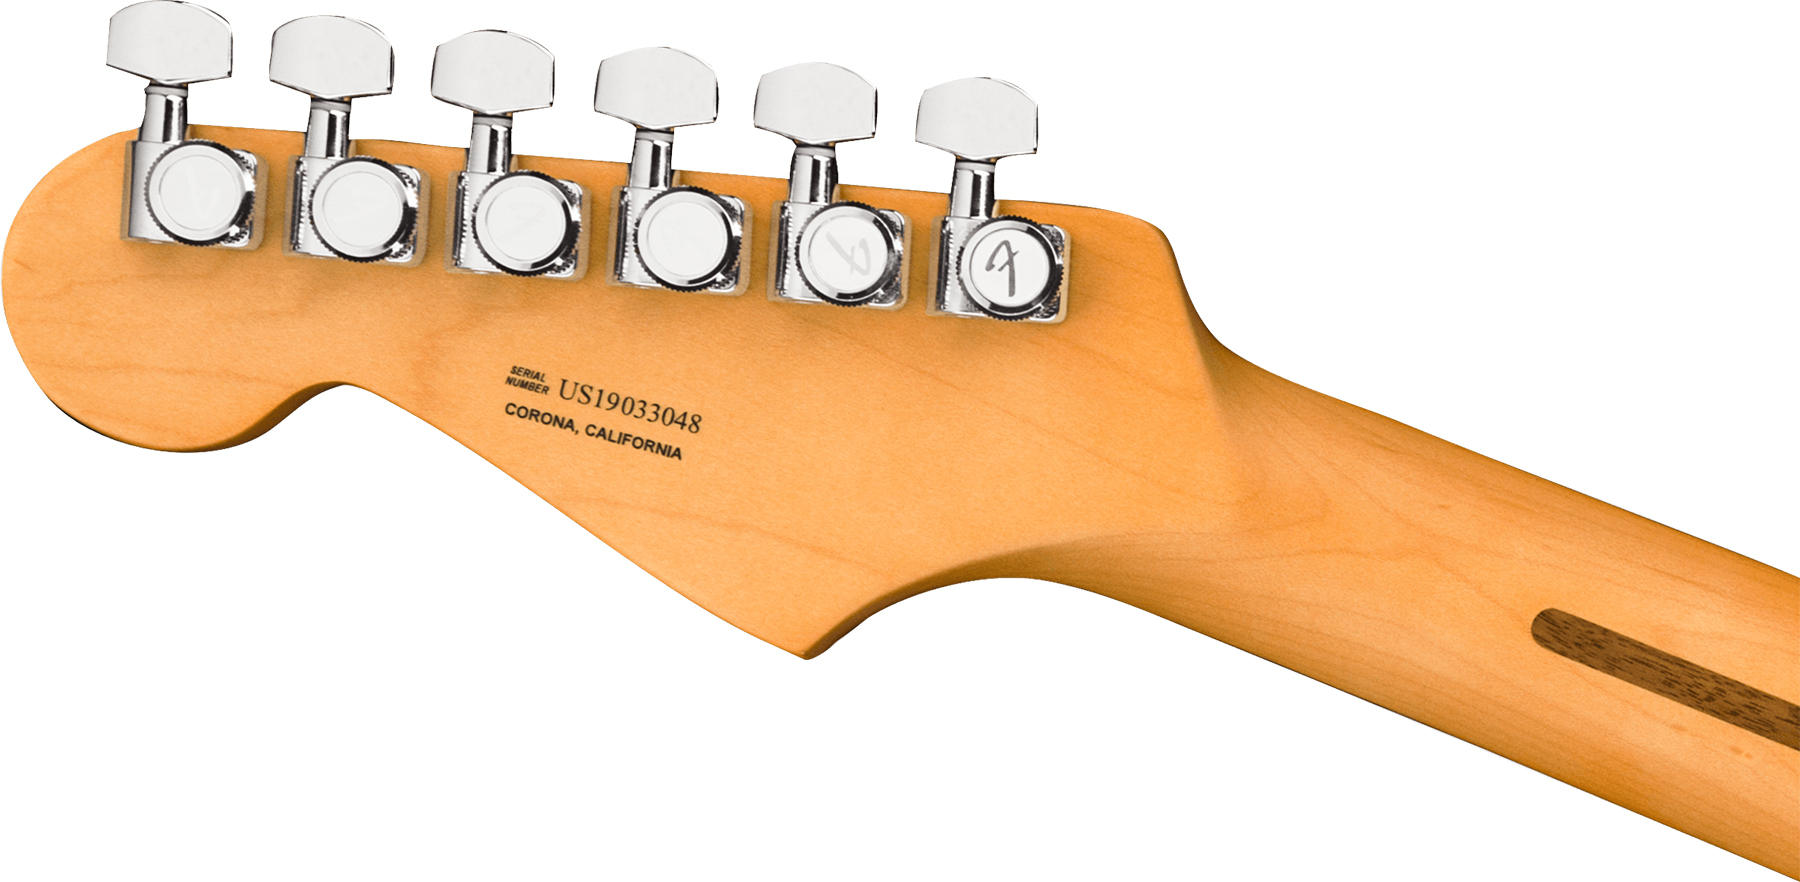 Fender Strat American Ultra Hss 2019 Usa Rw - Aged Natural - Str shape electric guitar - Variation 3